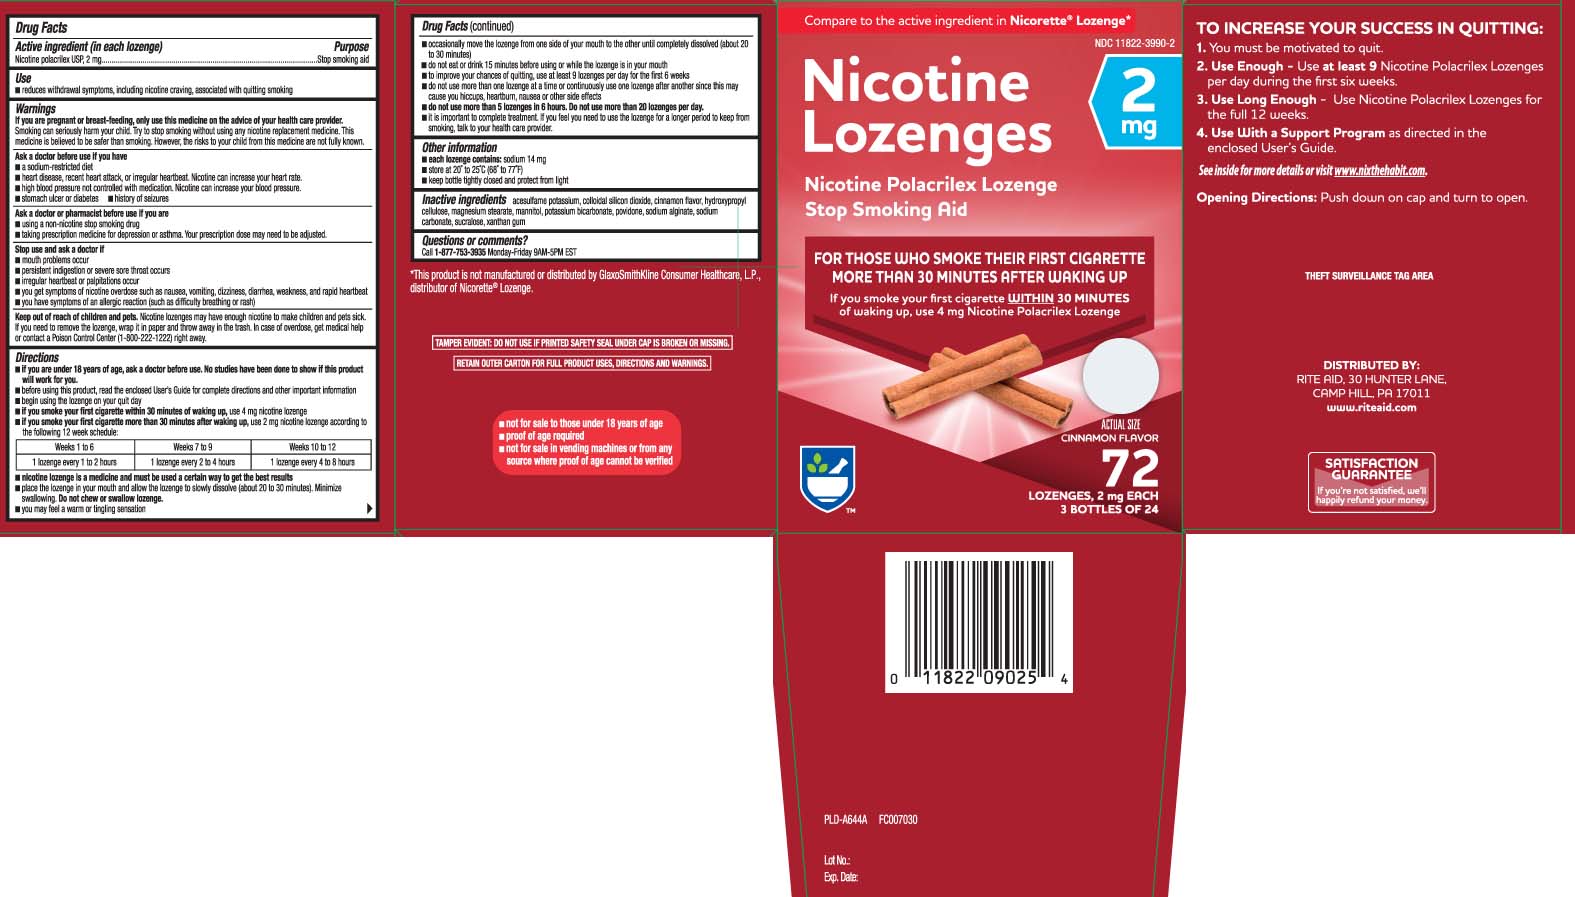 Nicotine Polacrilex USP, 2 mg